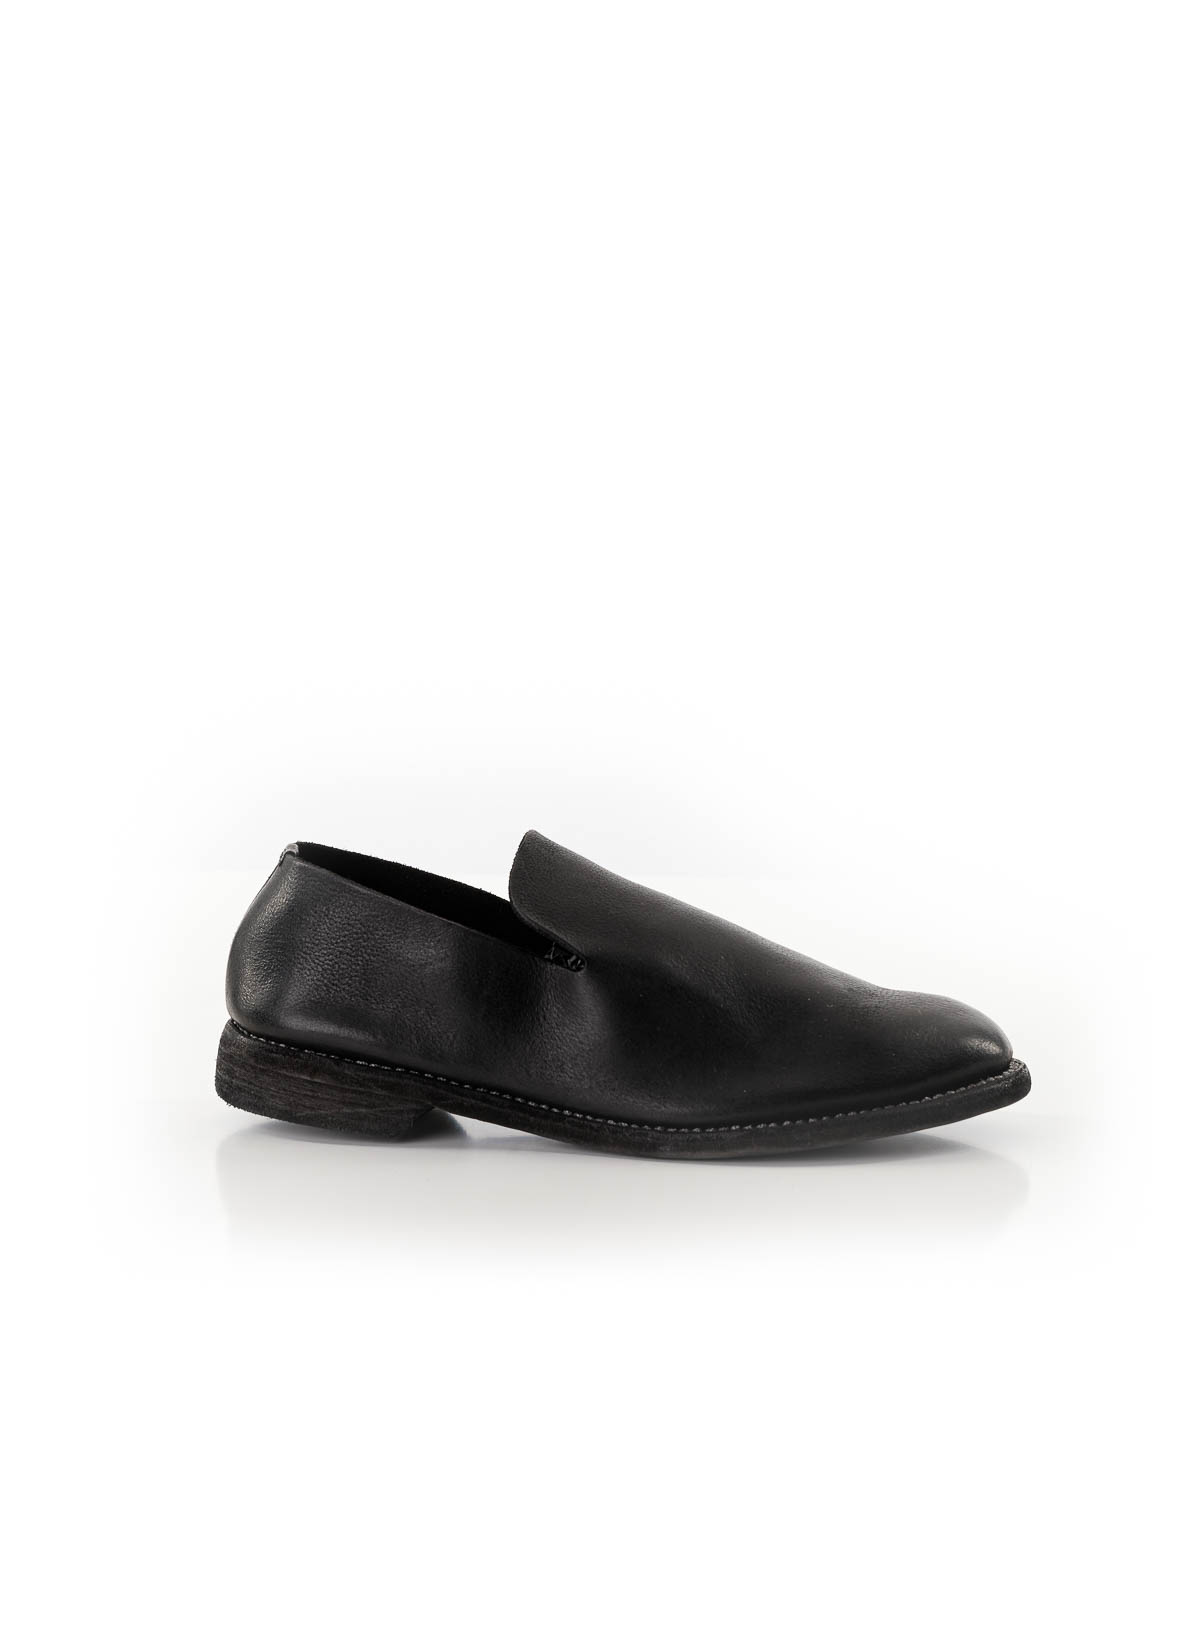 hide-m | GUIDI 100 Men Slipper with heel, black calf leather